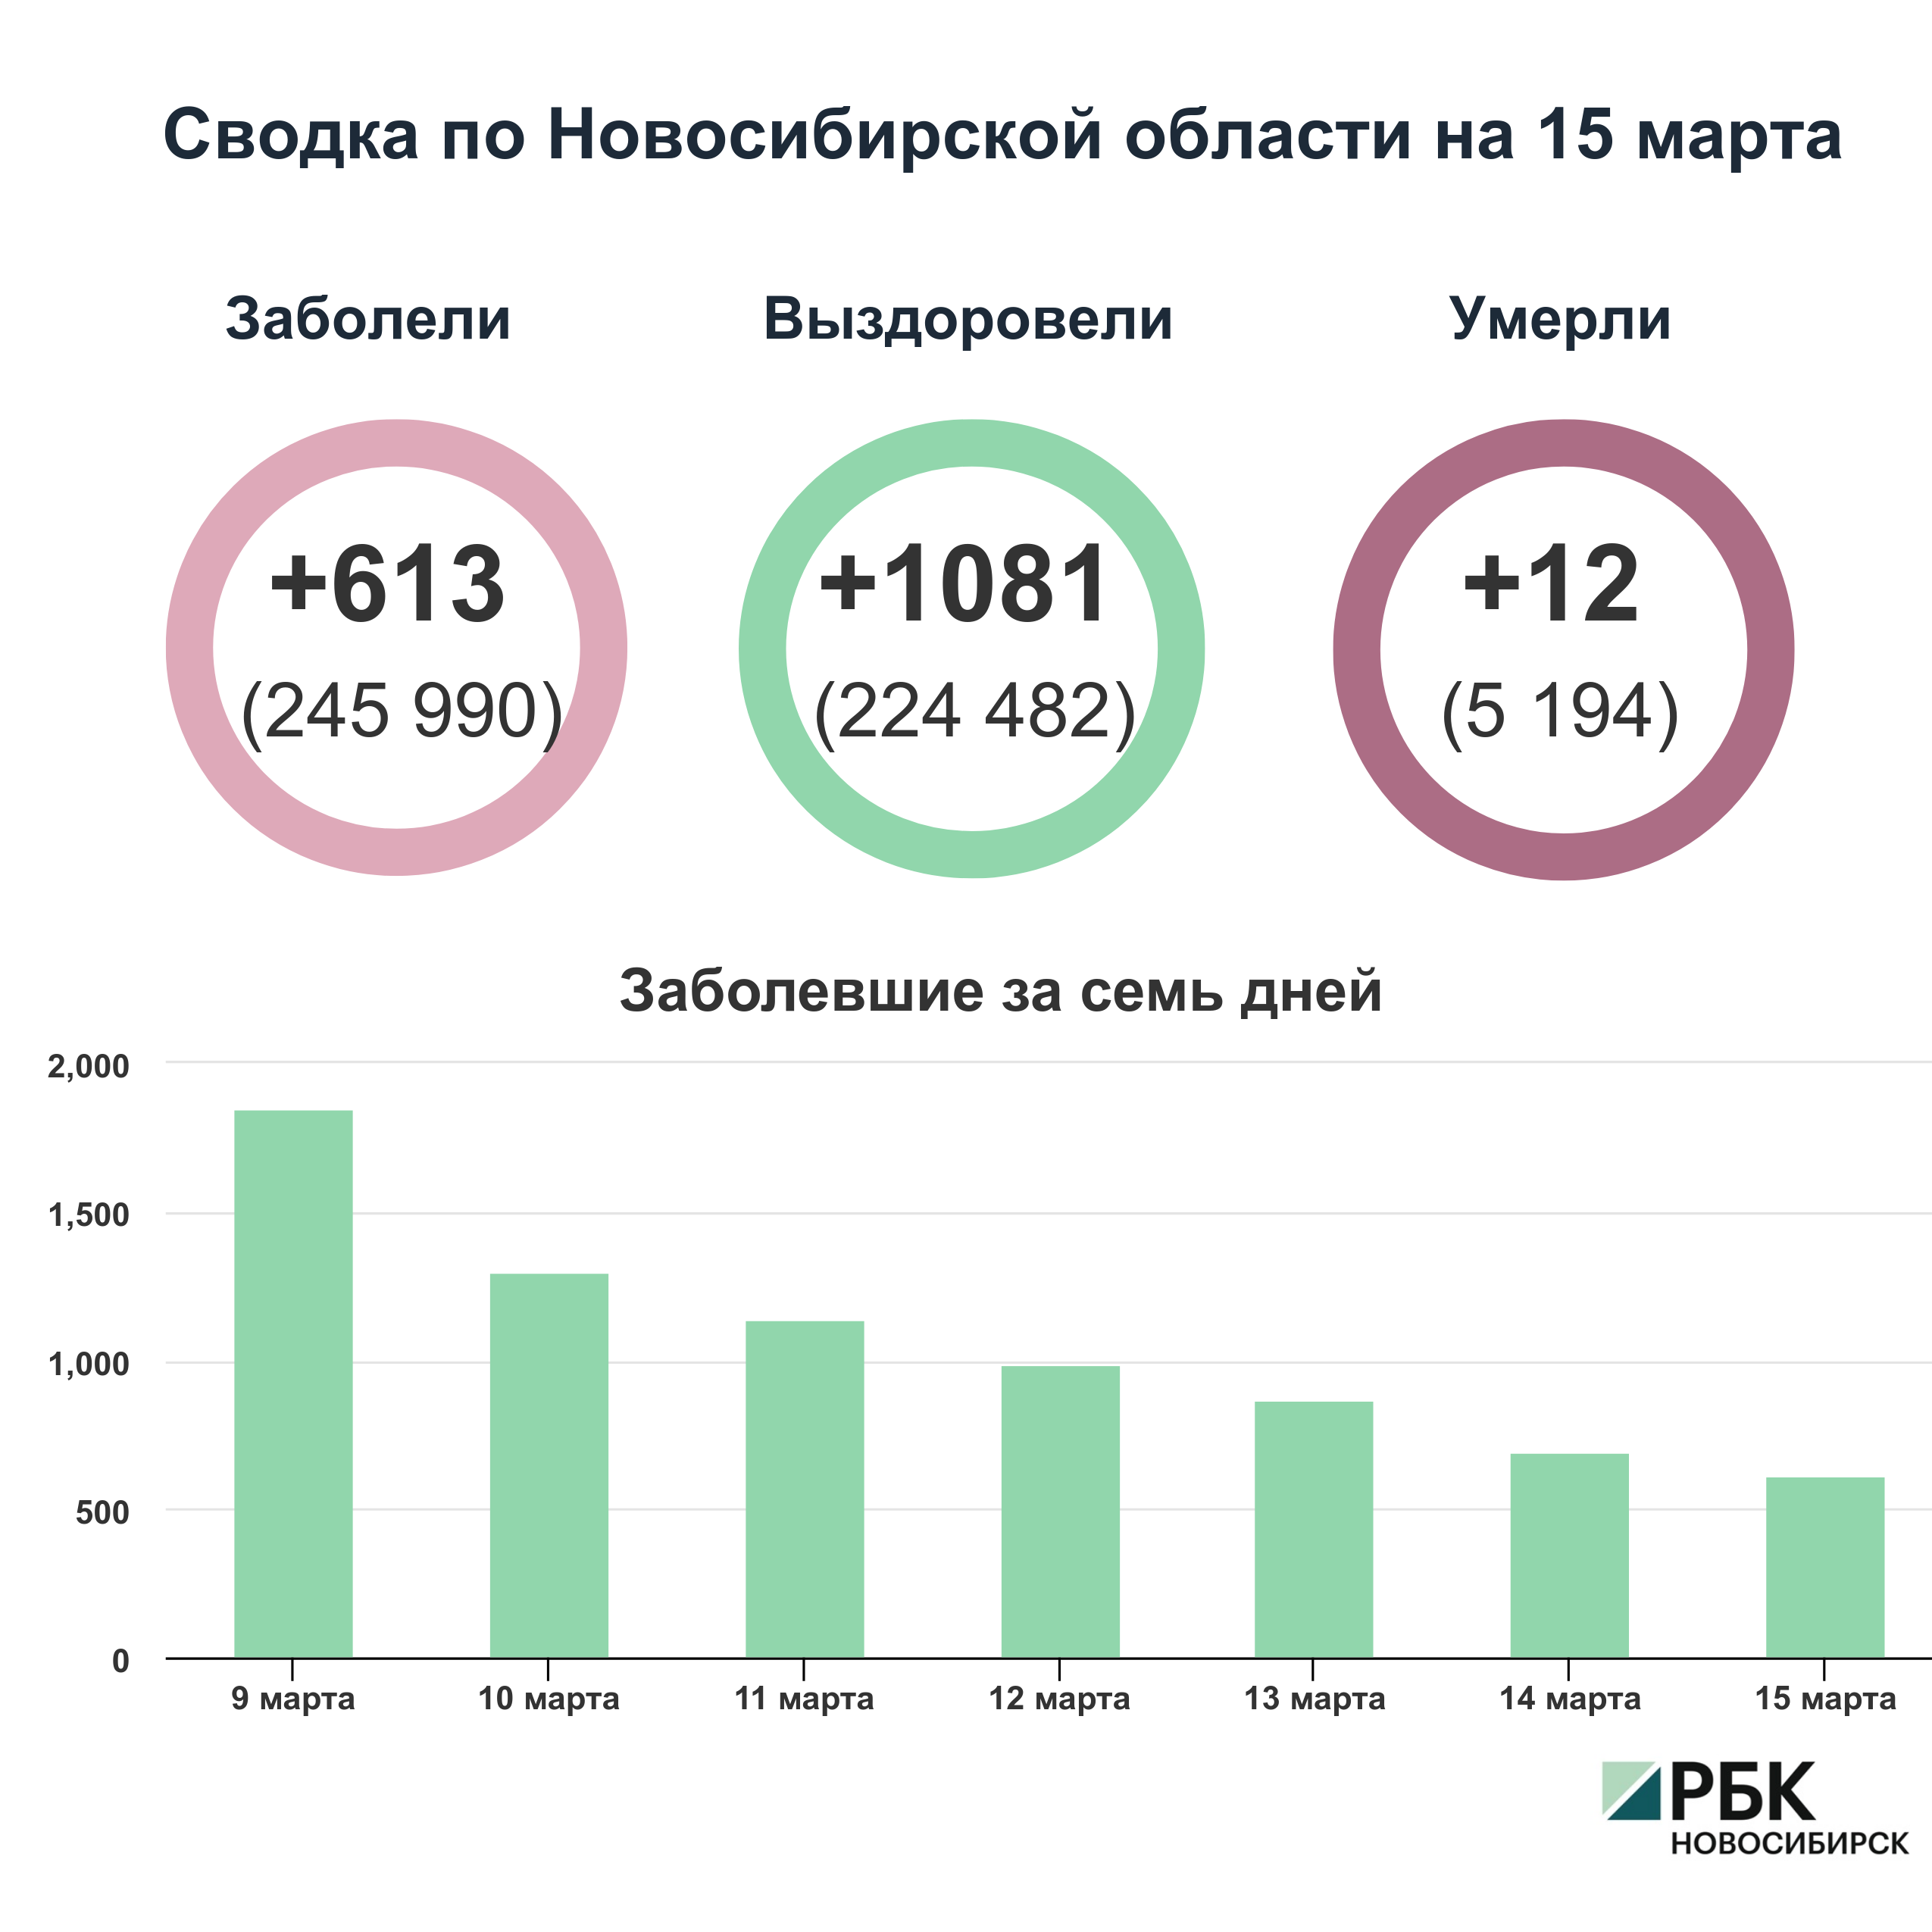 Коронавирус в Новосибирске: сводка на 15 марта